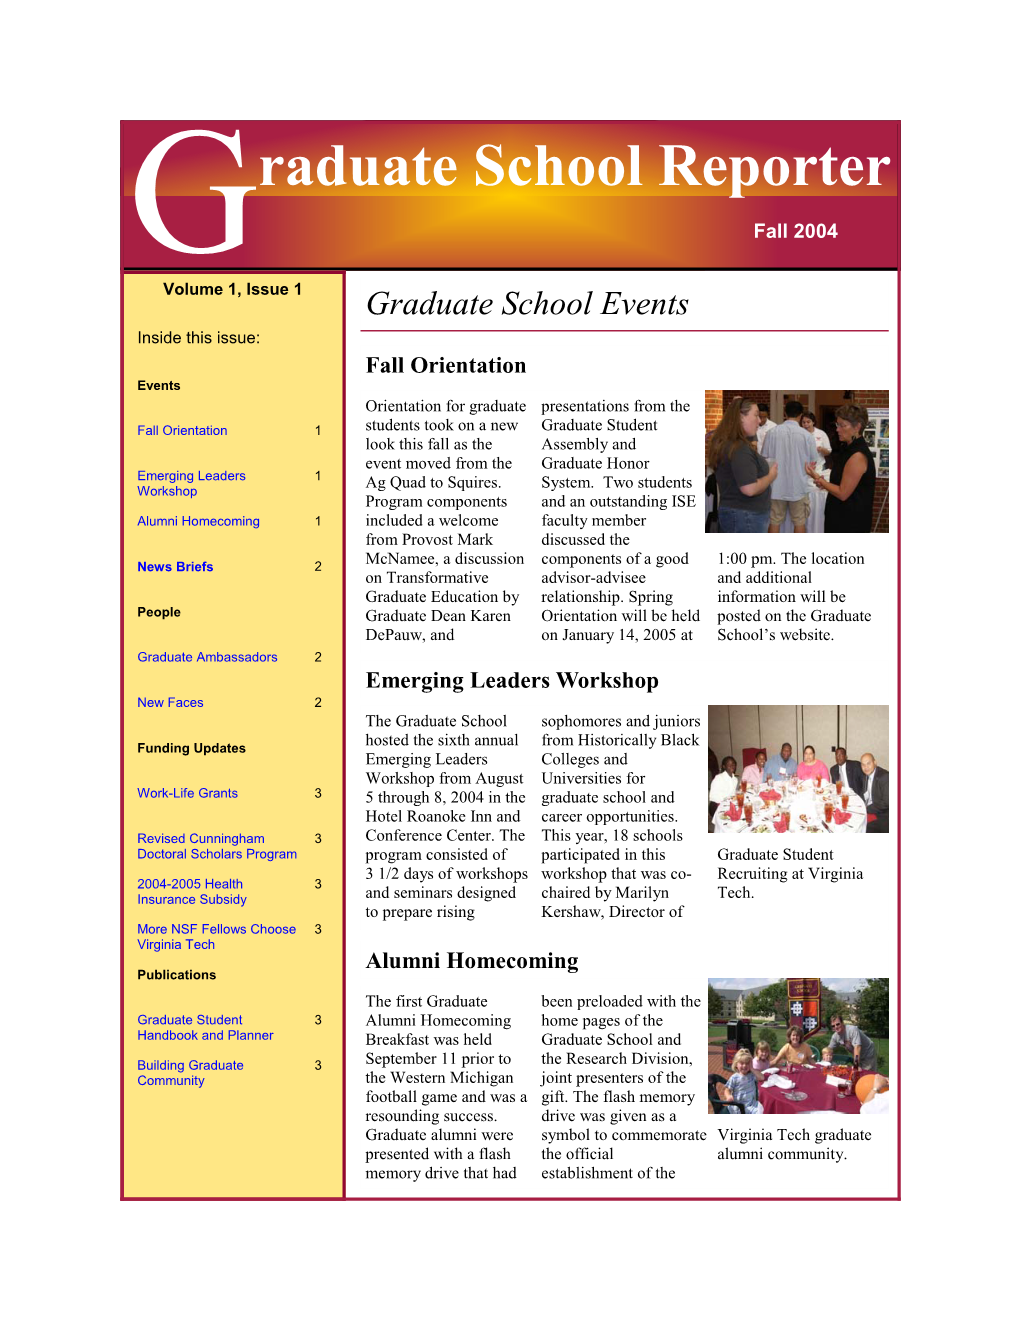 Graduate School Reporter Fall 2004, Page 2